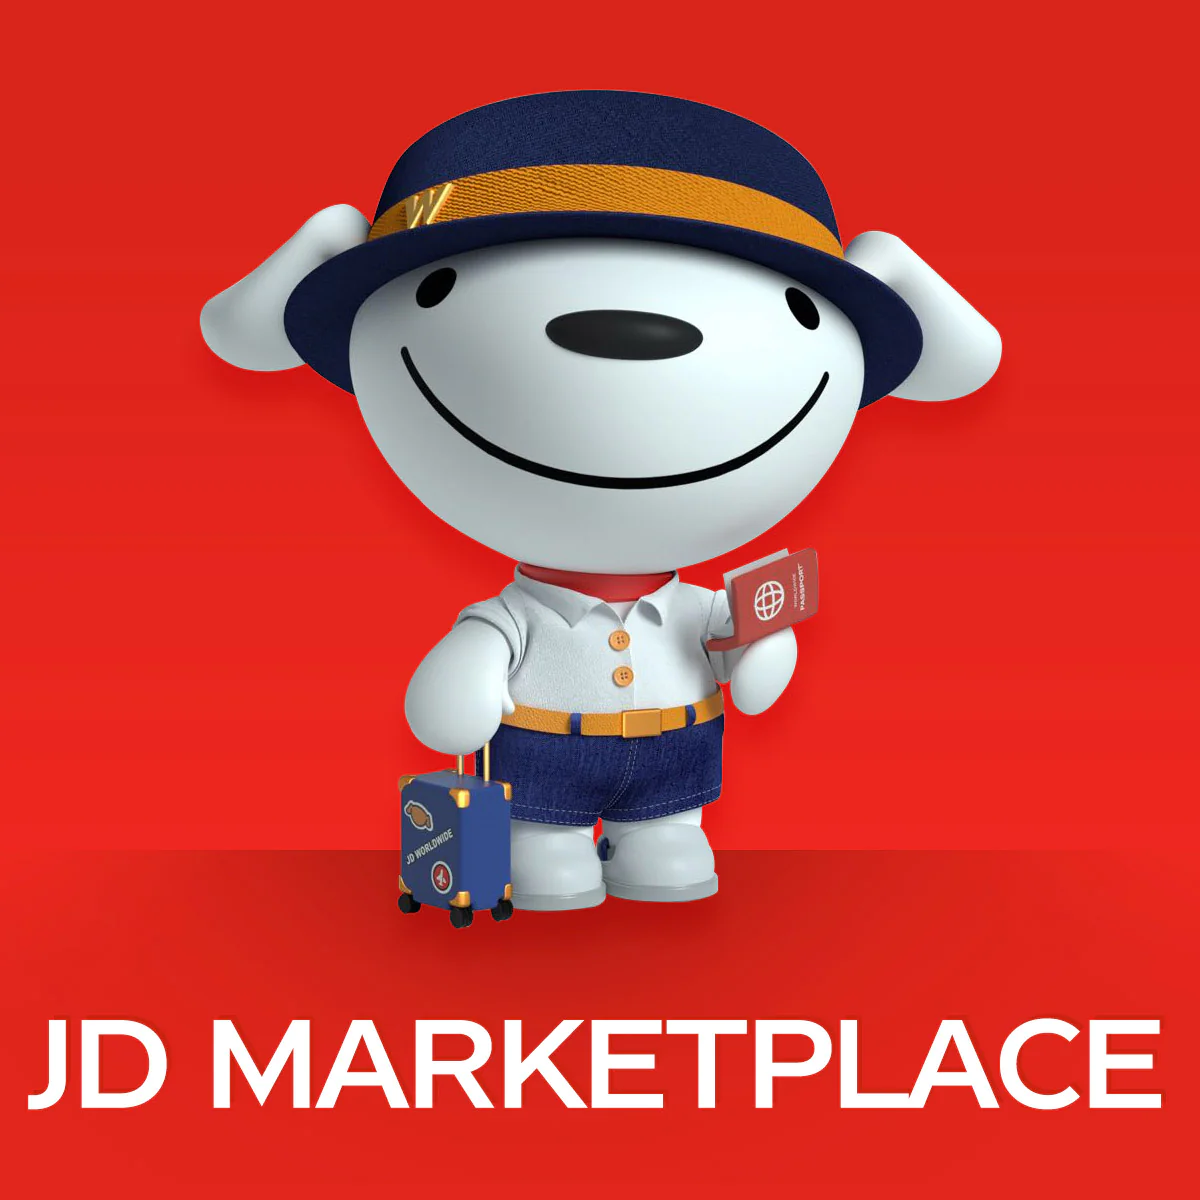 JD Marketplace